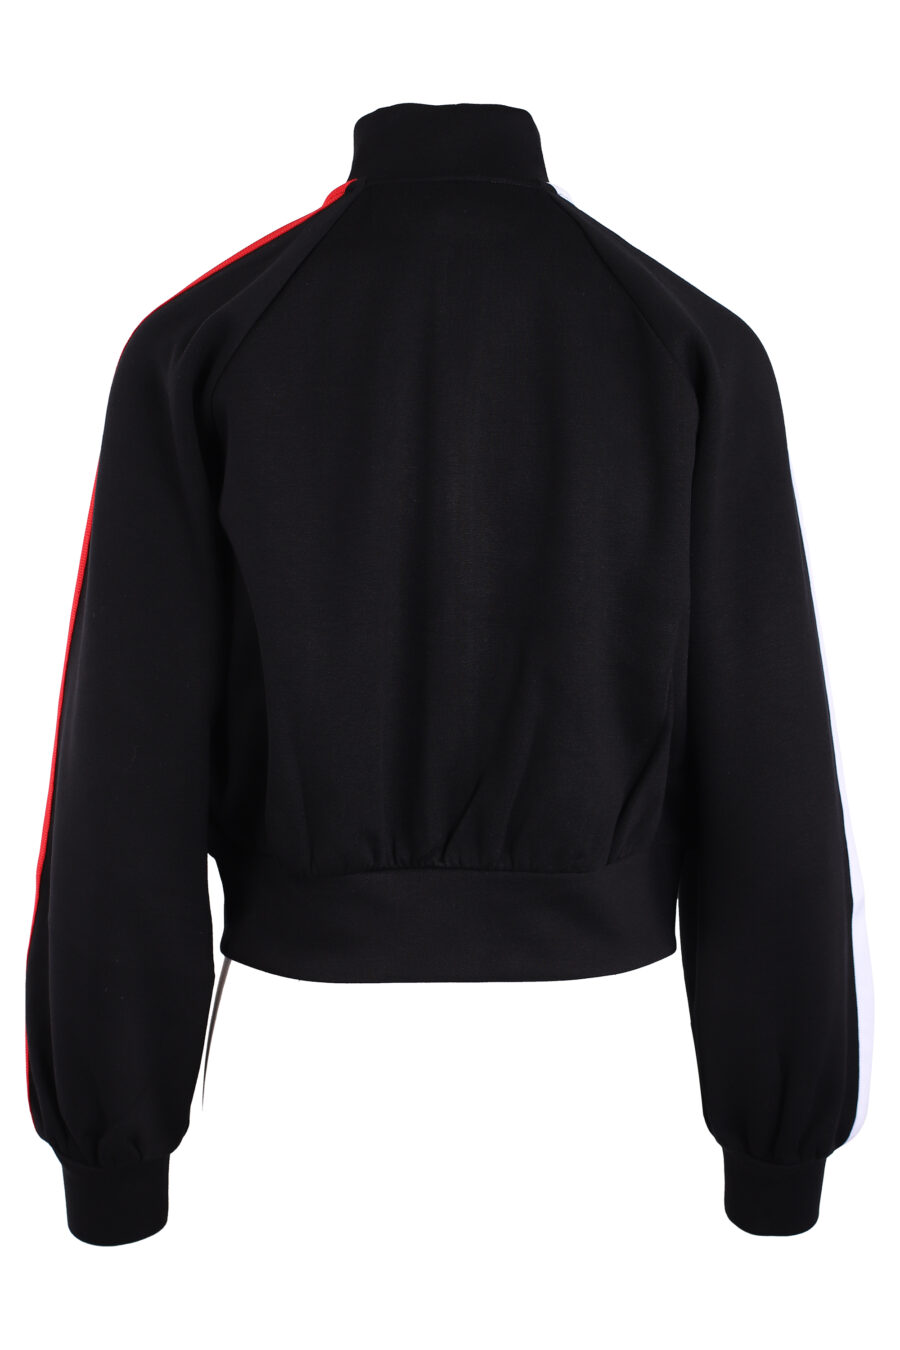 Black sweatshirt with zip and multicoloured stripes on sleeves - IMG 3372